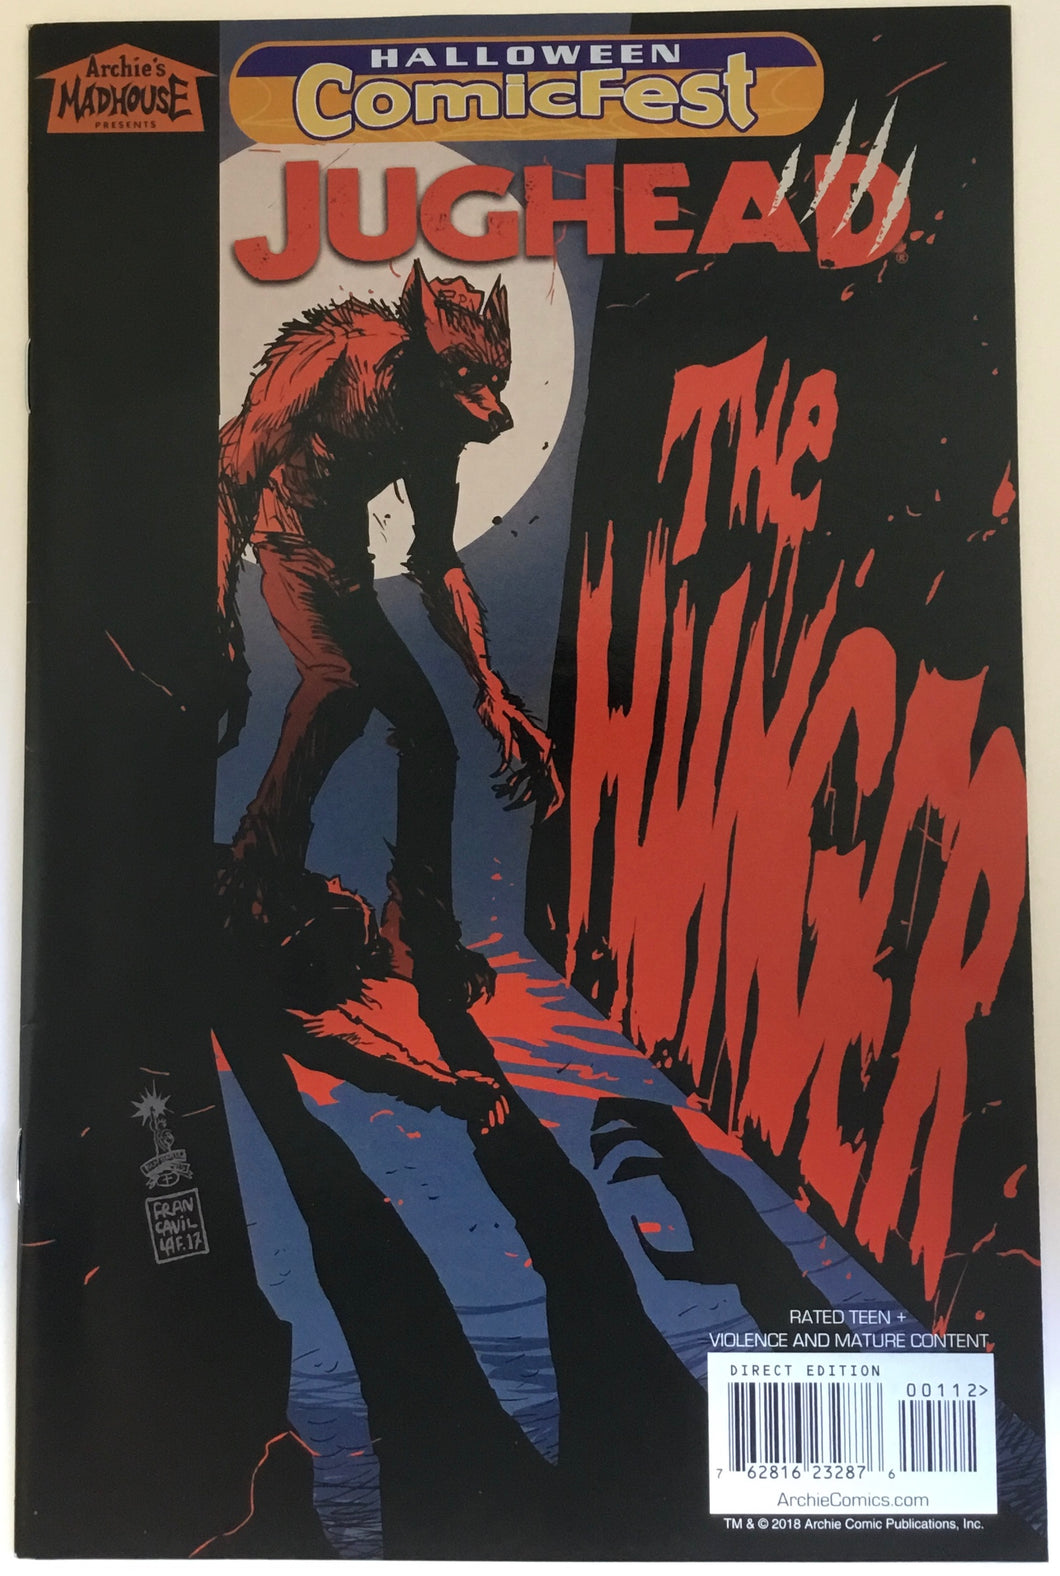 Jughead The Hunger no. #1 Halloween Comicfest Edition 2018